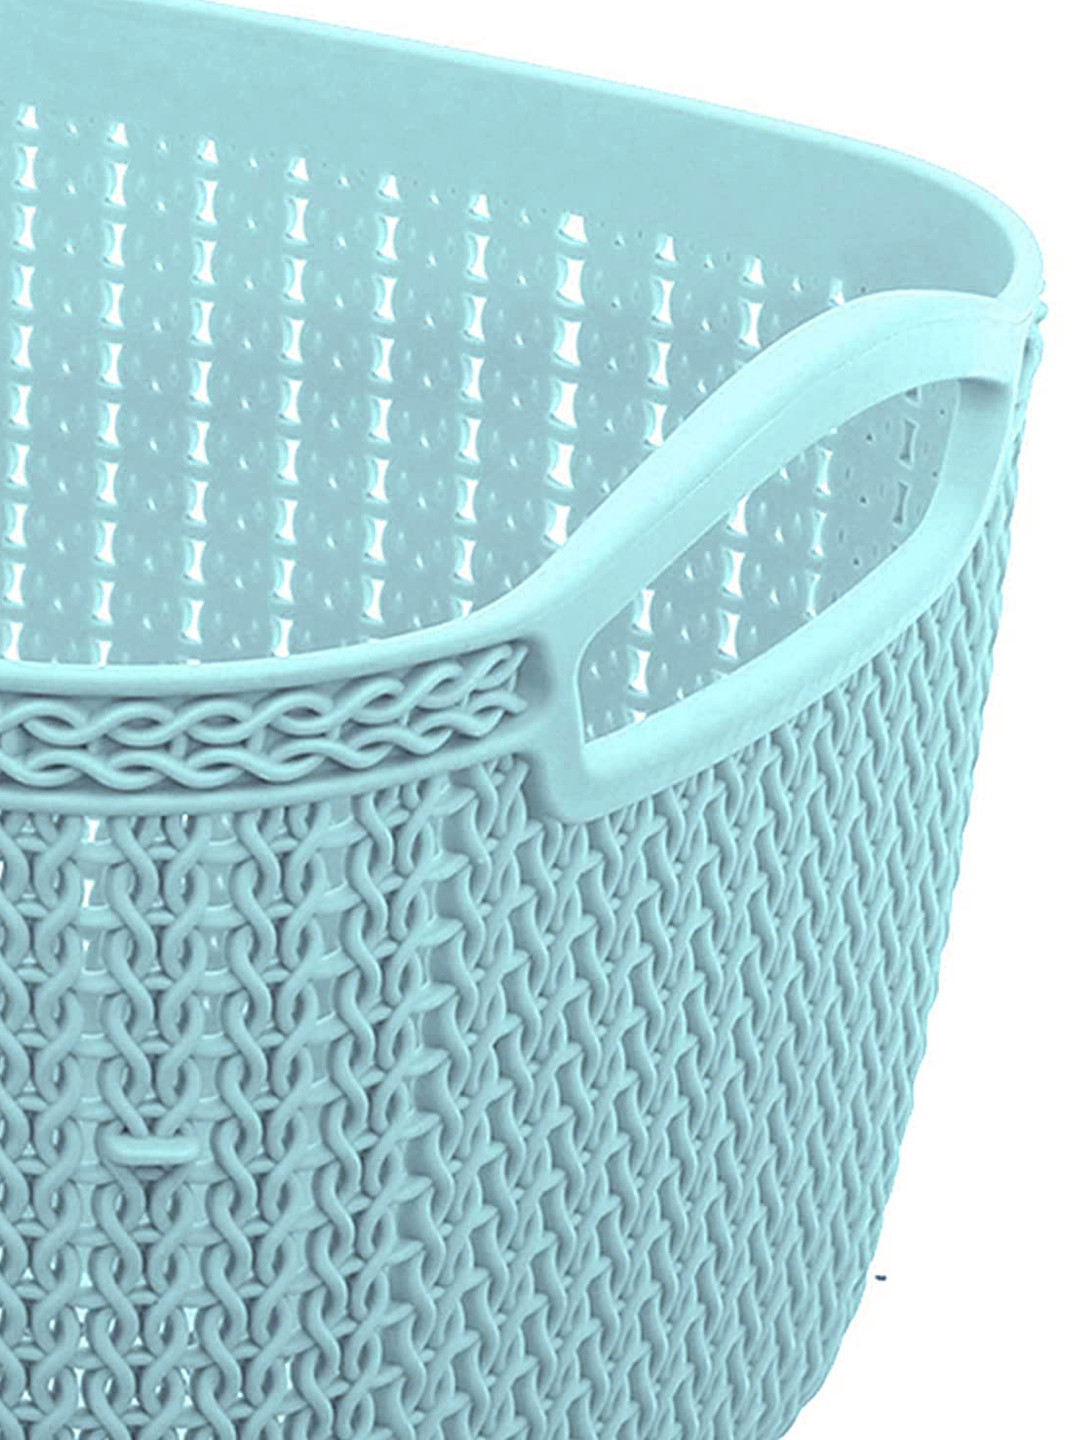 Kuber Industries Q-5 Unbreakable Plastic 3 Pieces Multipurpose Medium Size Flexible Storage Baskets/Fruit Vegetable Bathroom Stationary Home Basket with Handles (Light Green & Light Blue & Grey)